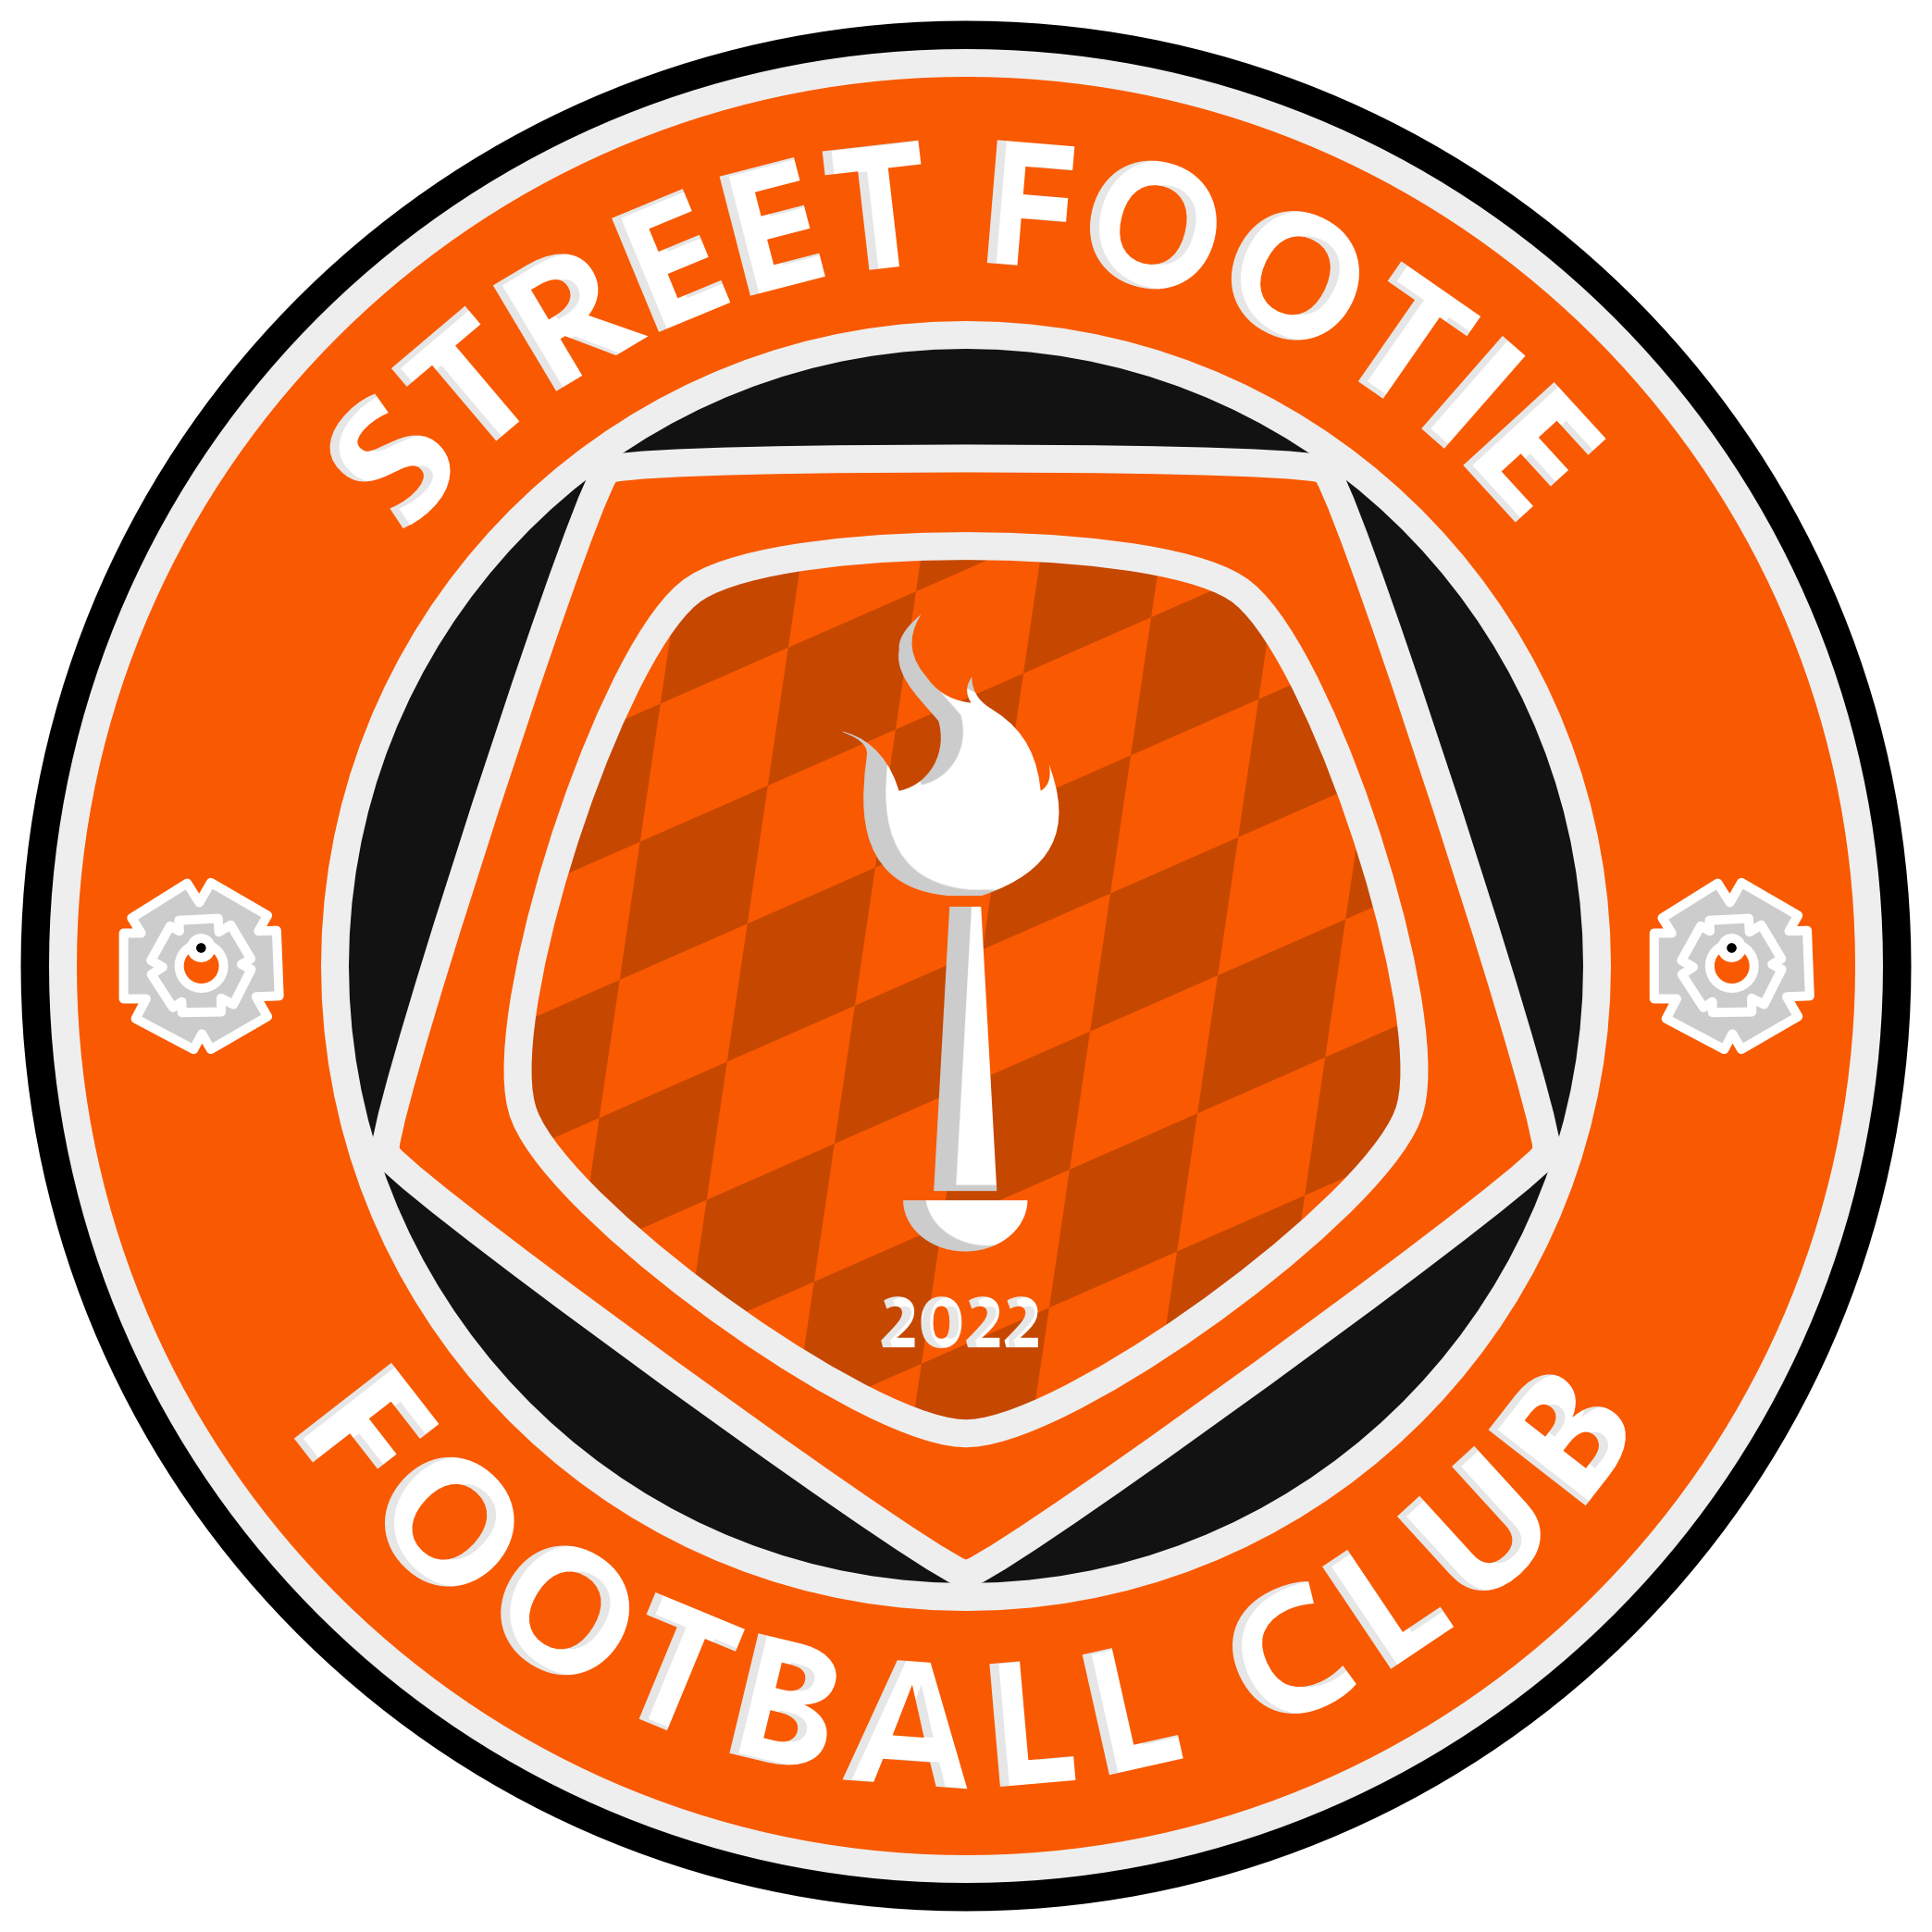 street footie Football Club